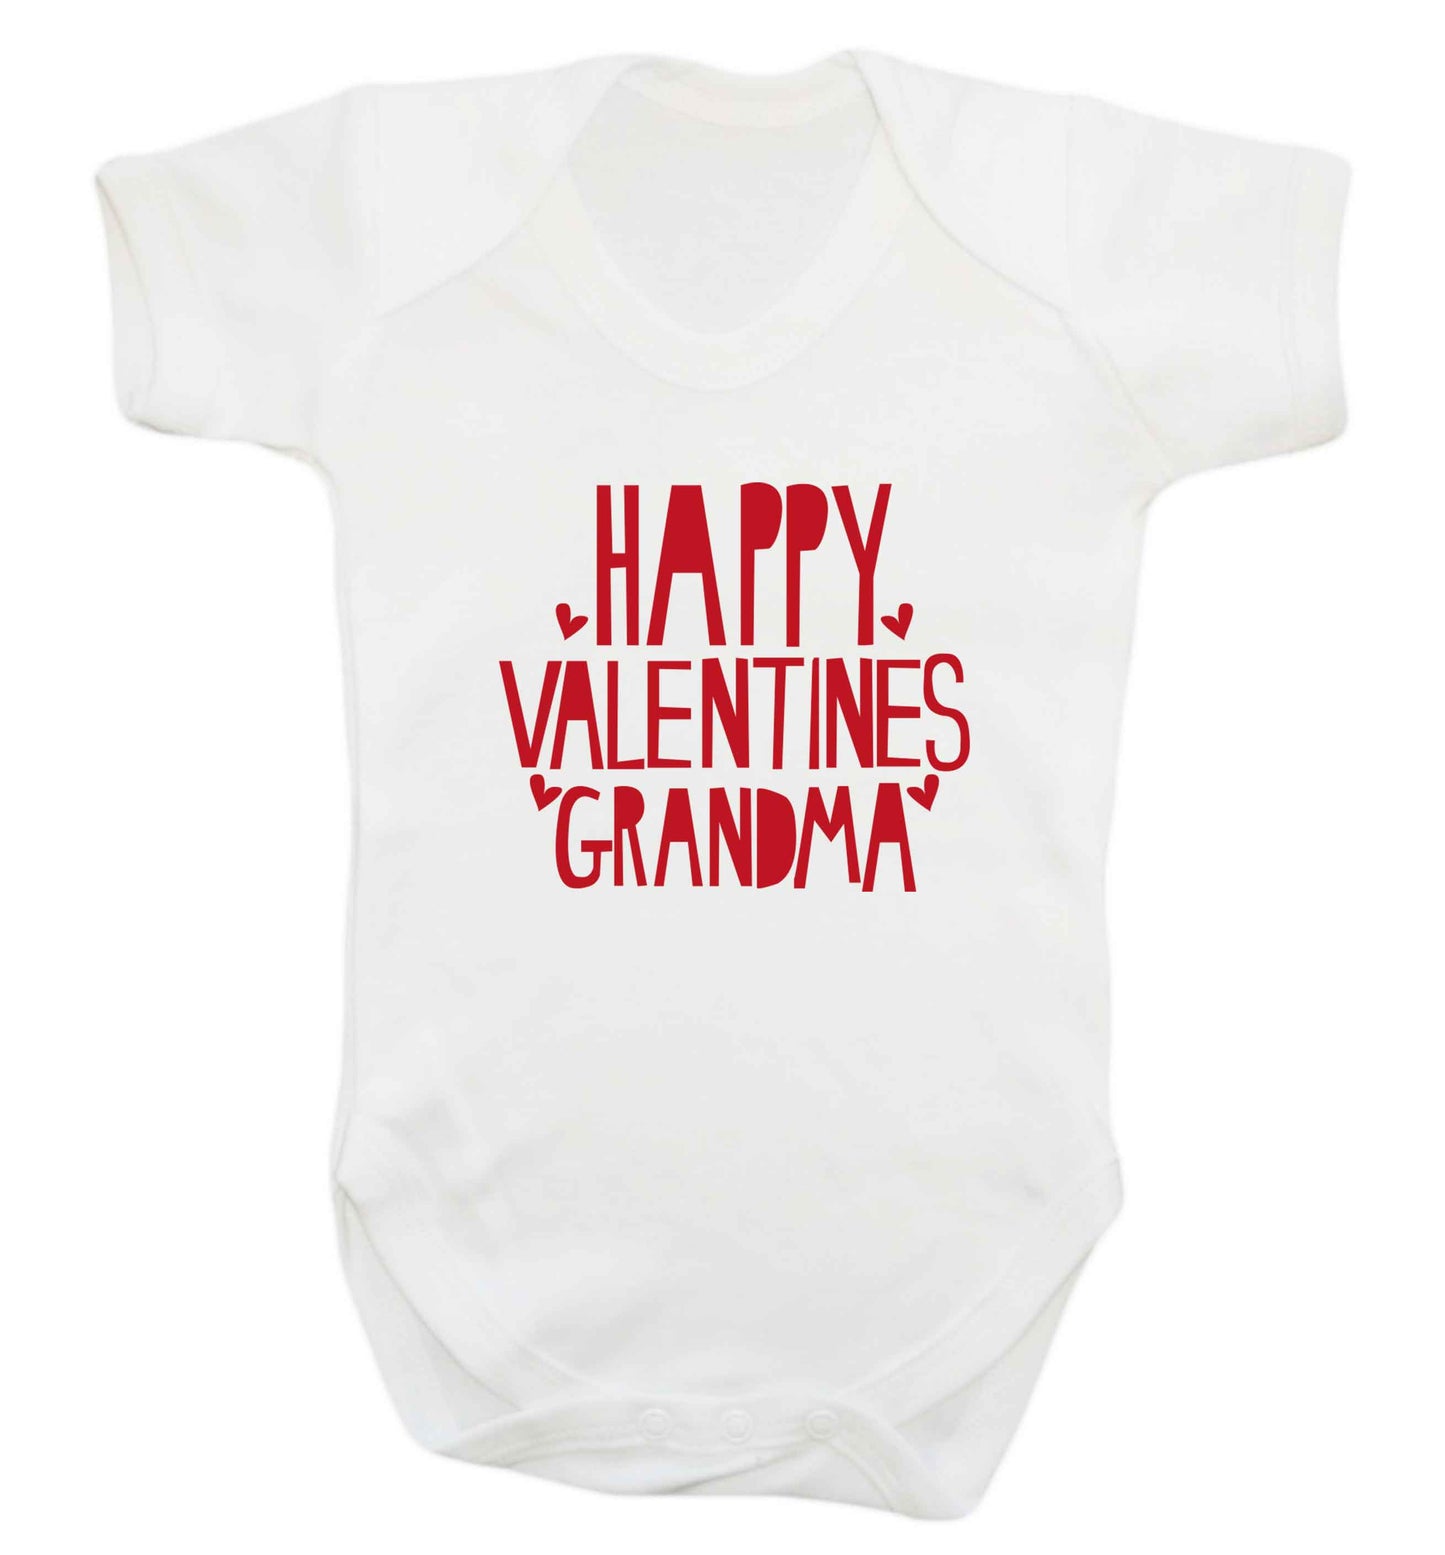 Happy valentines grandma baby vest white 18-24 months